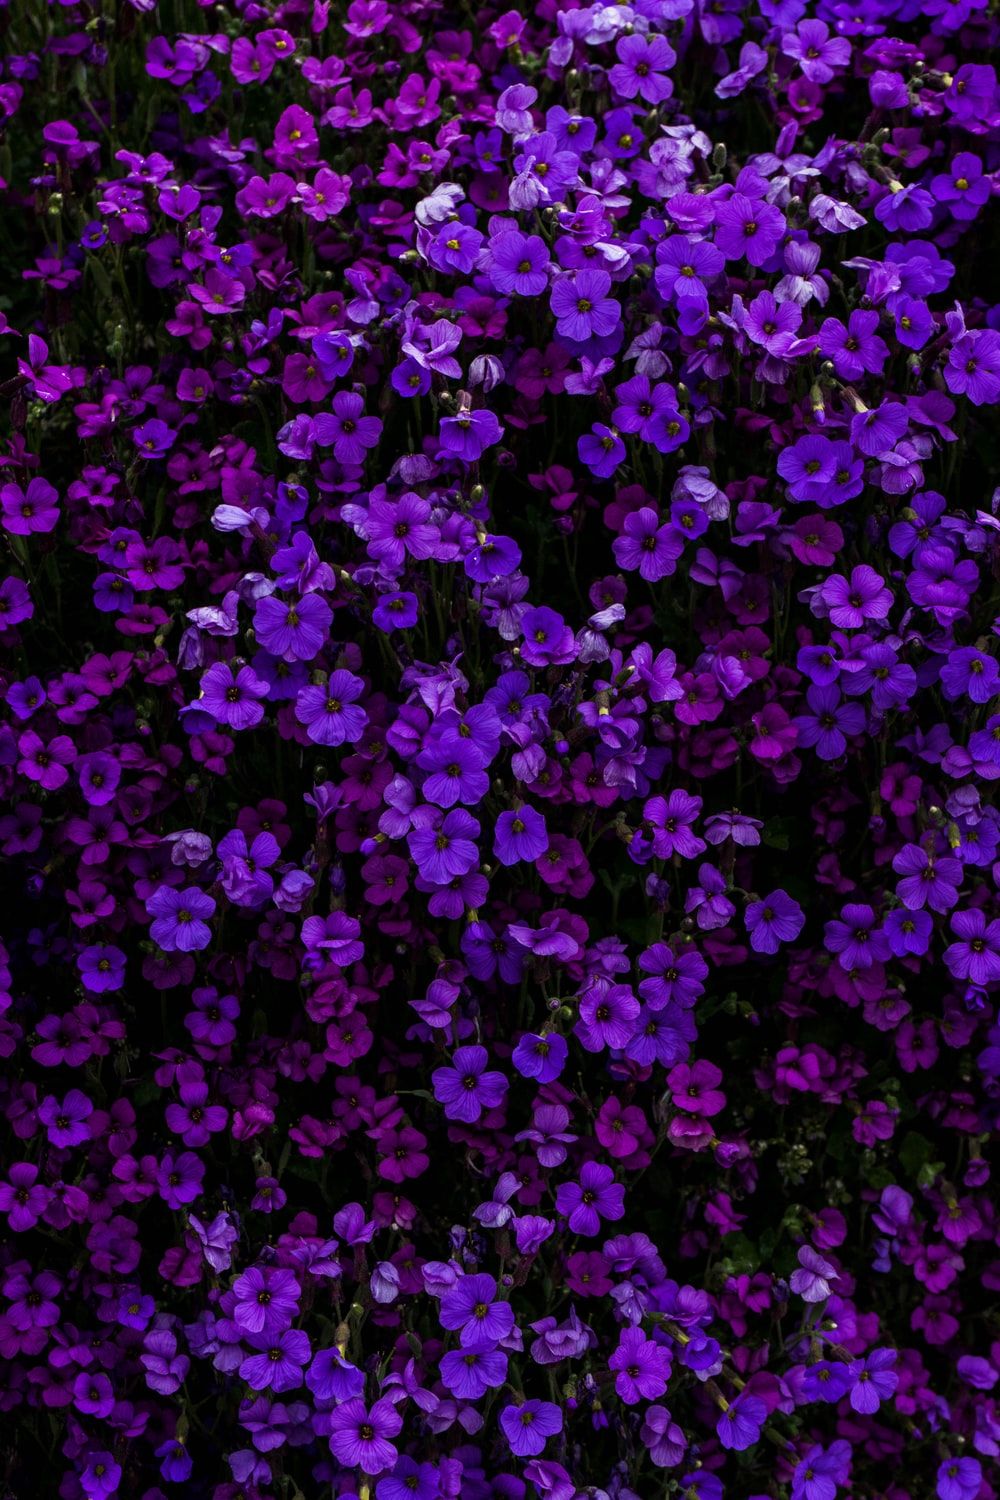 Purple Wallpaper: Free HD Download .com